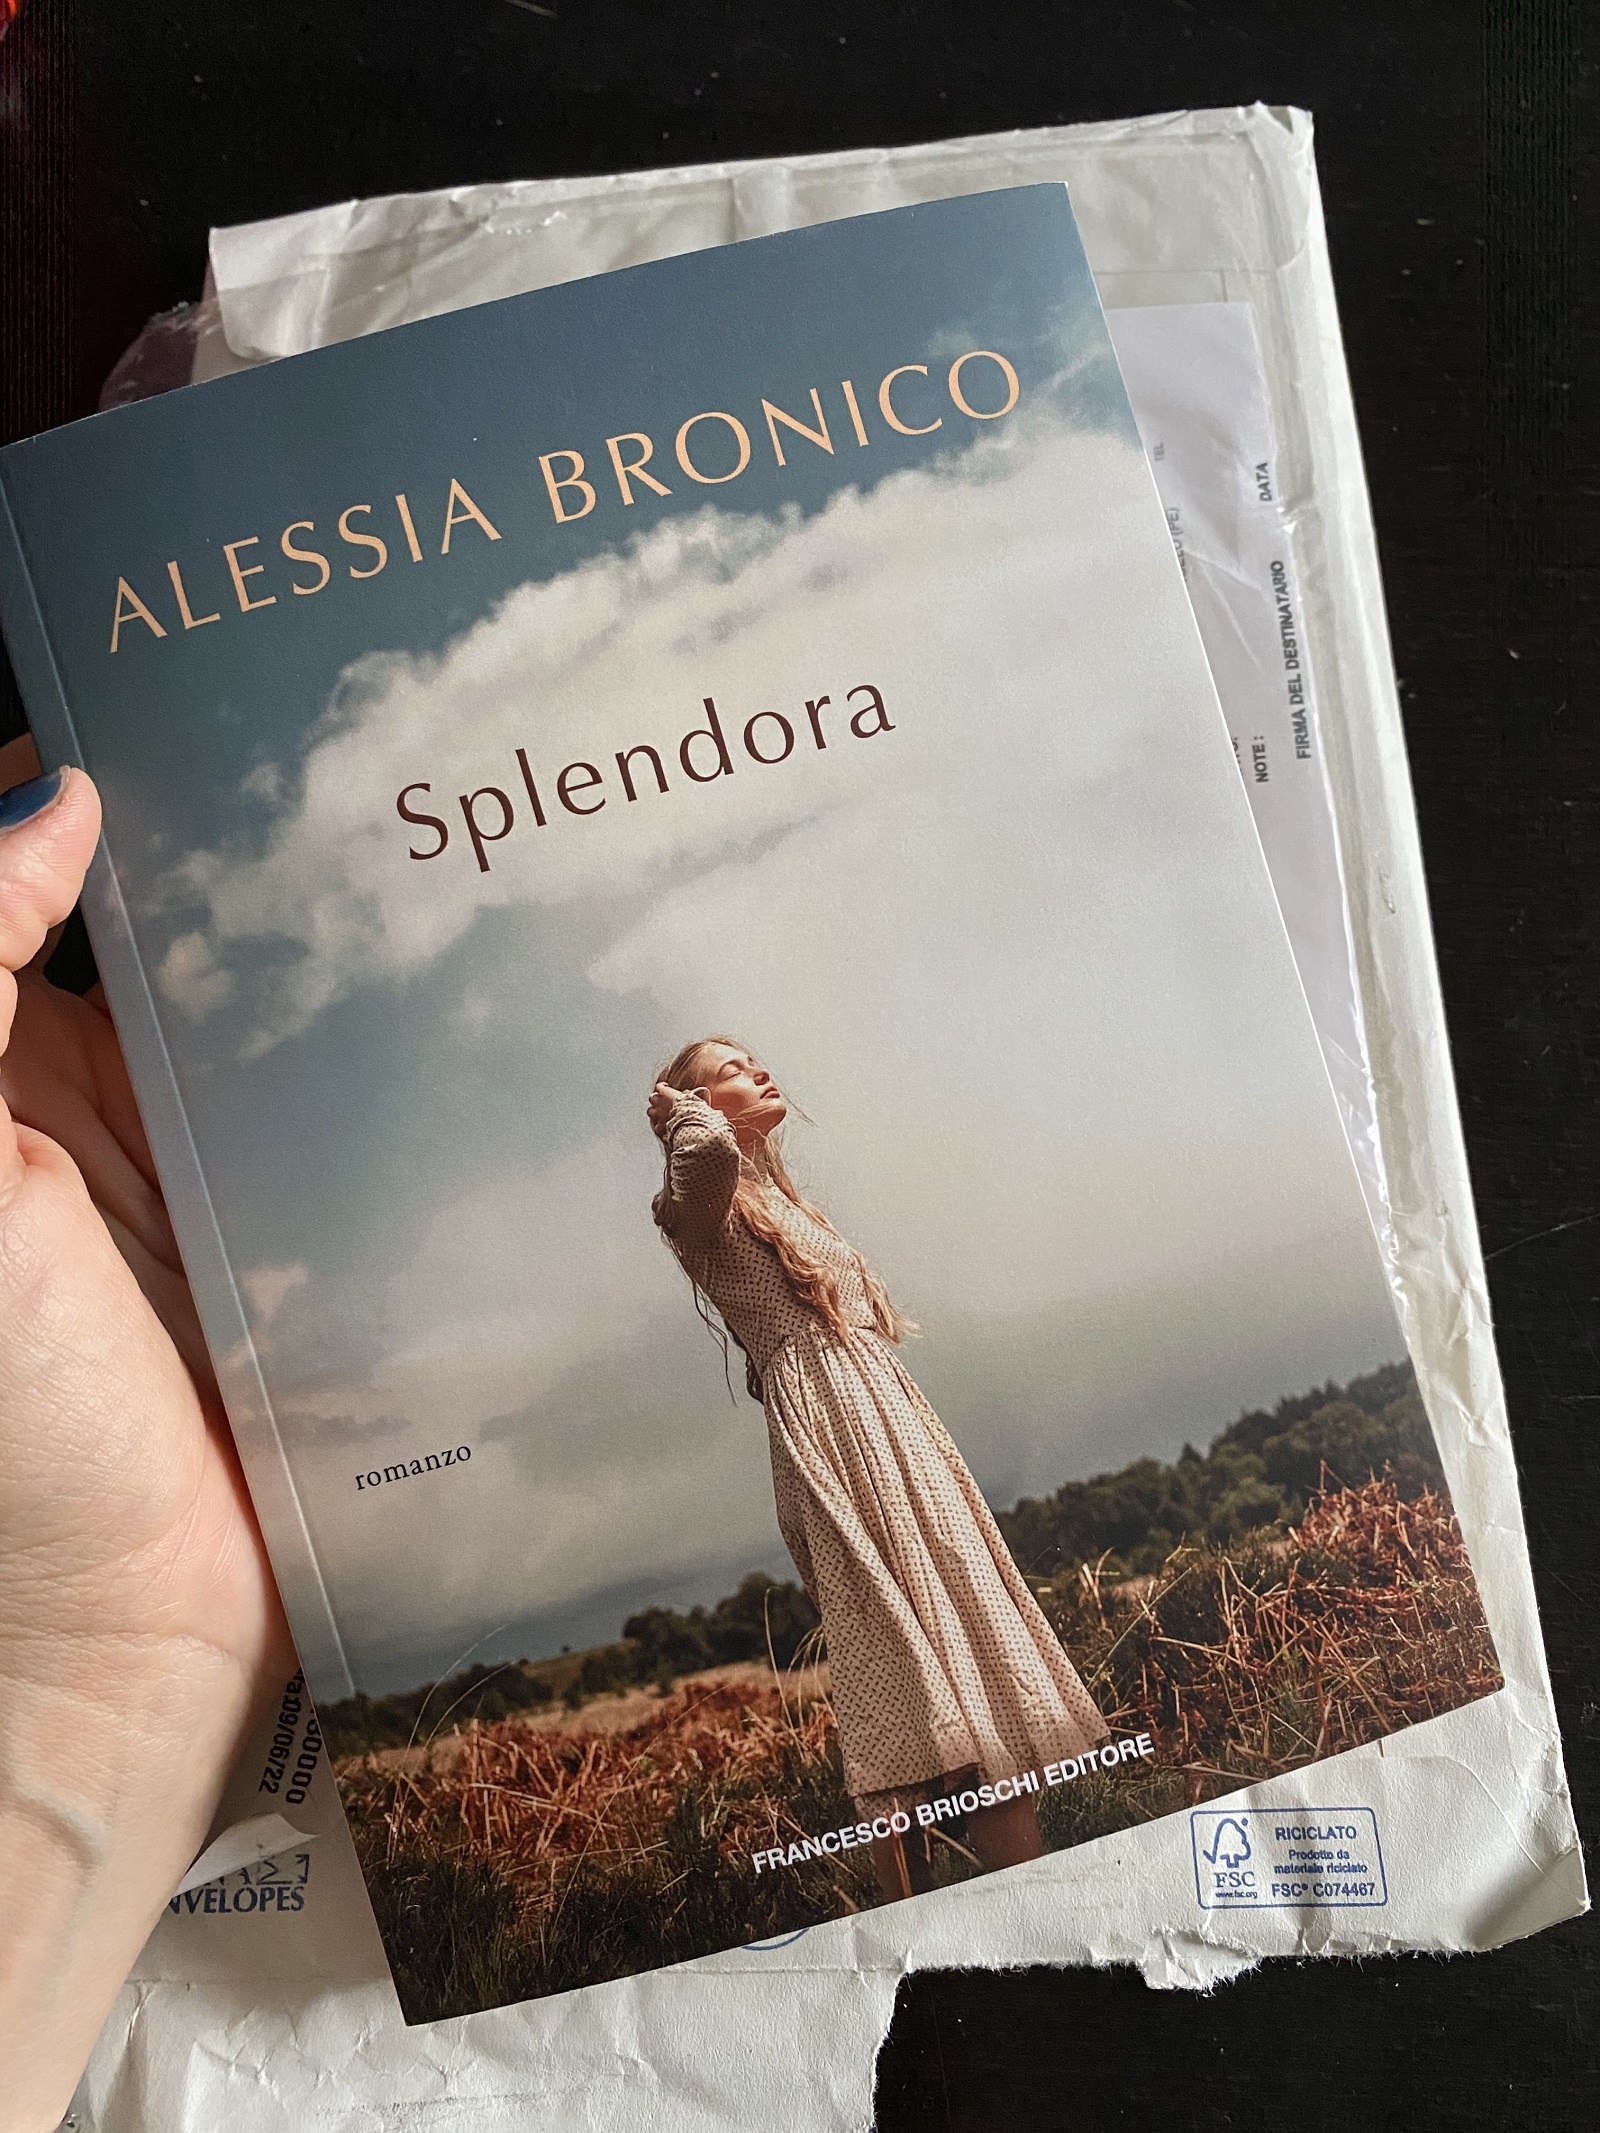 “Splendora” – Alessia Bronico